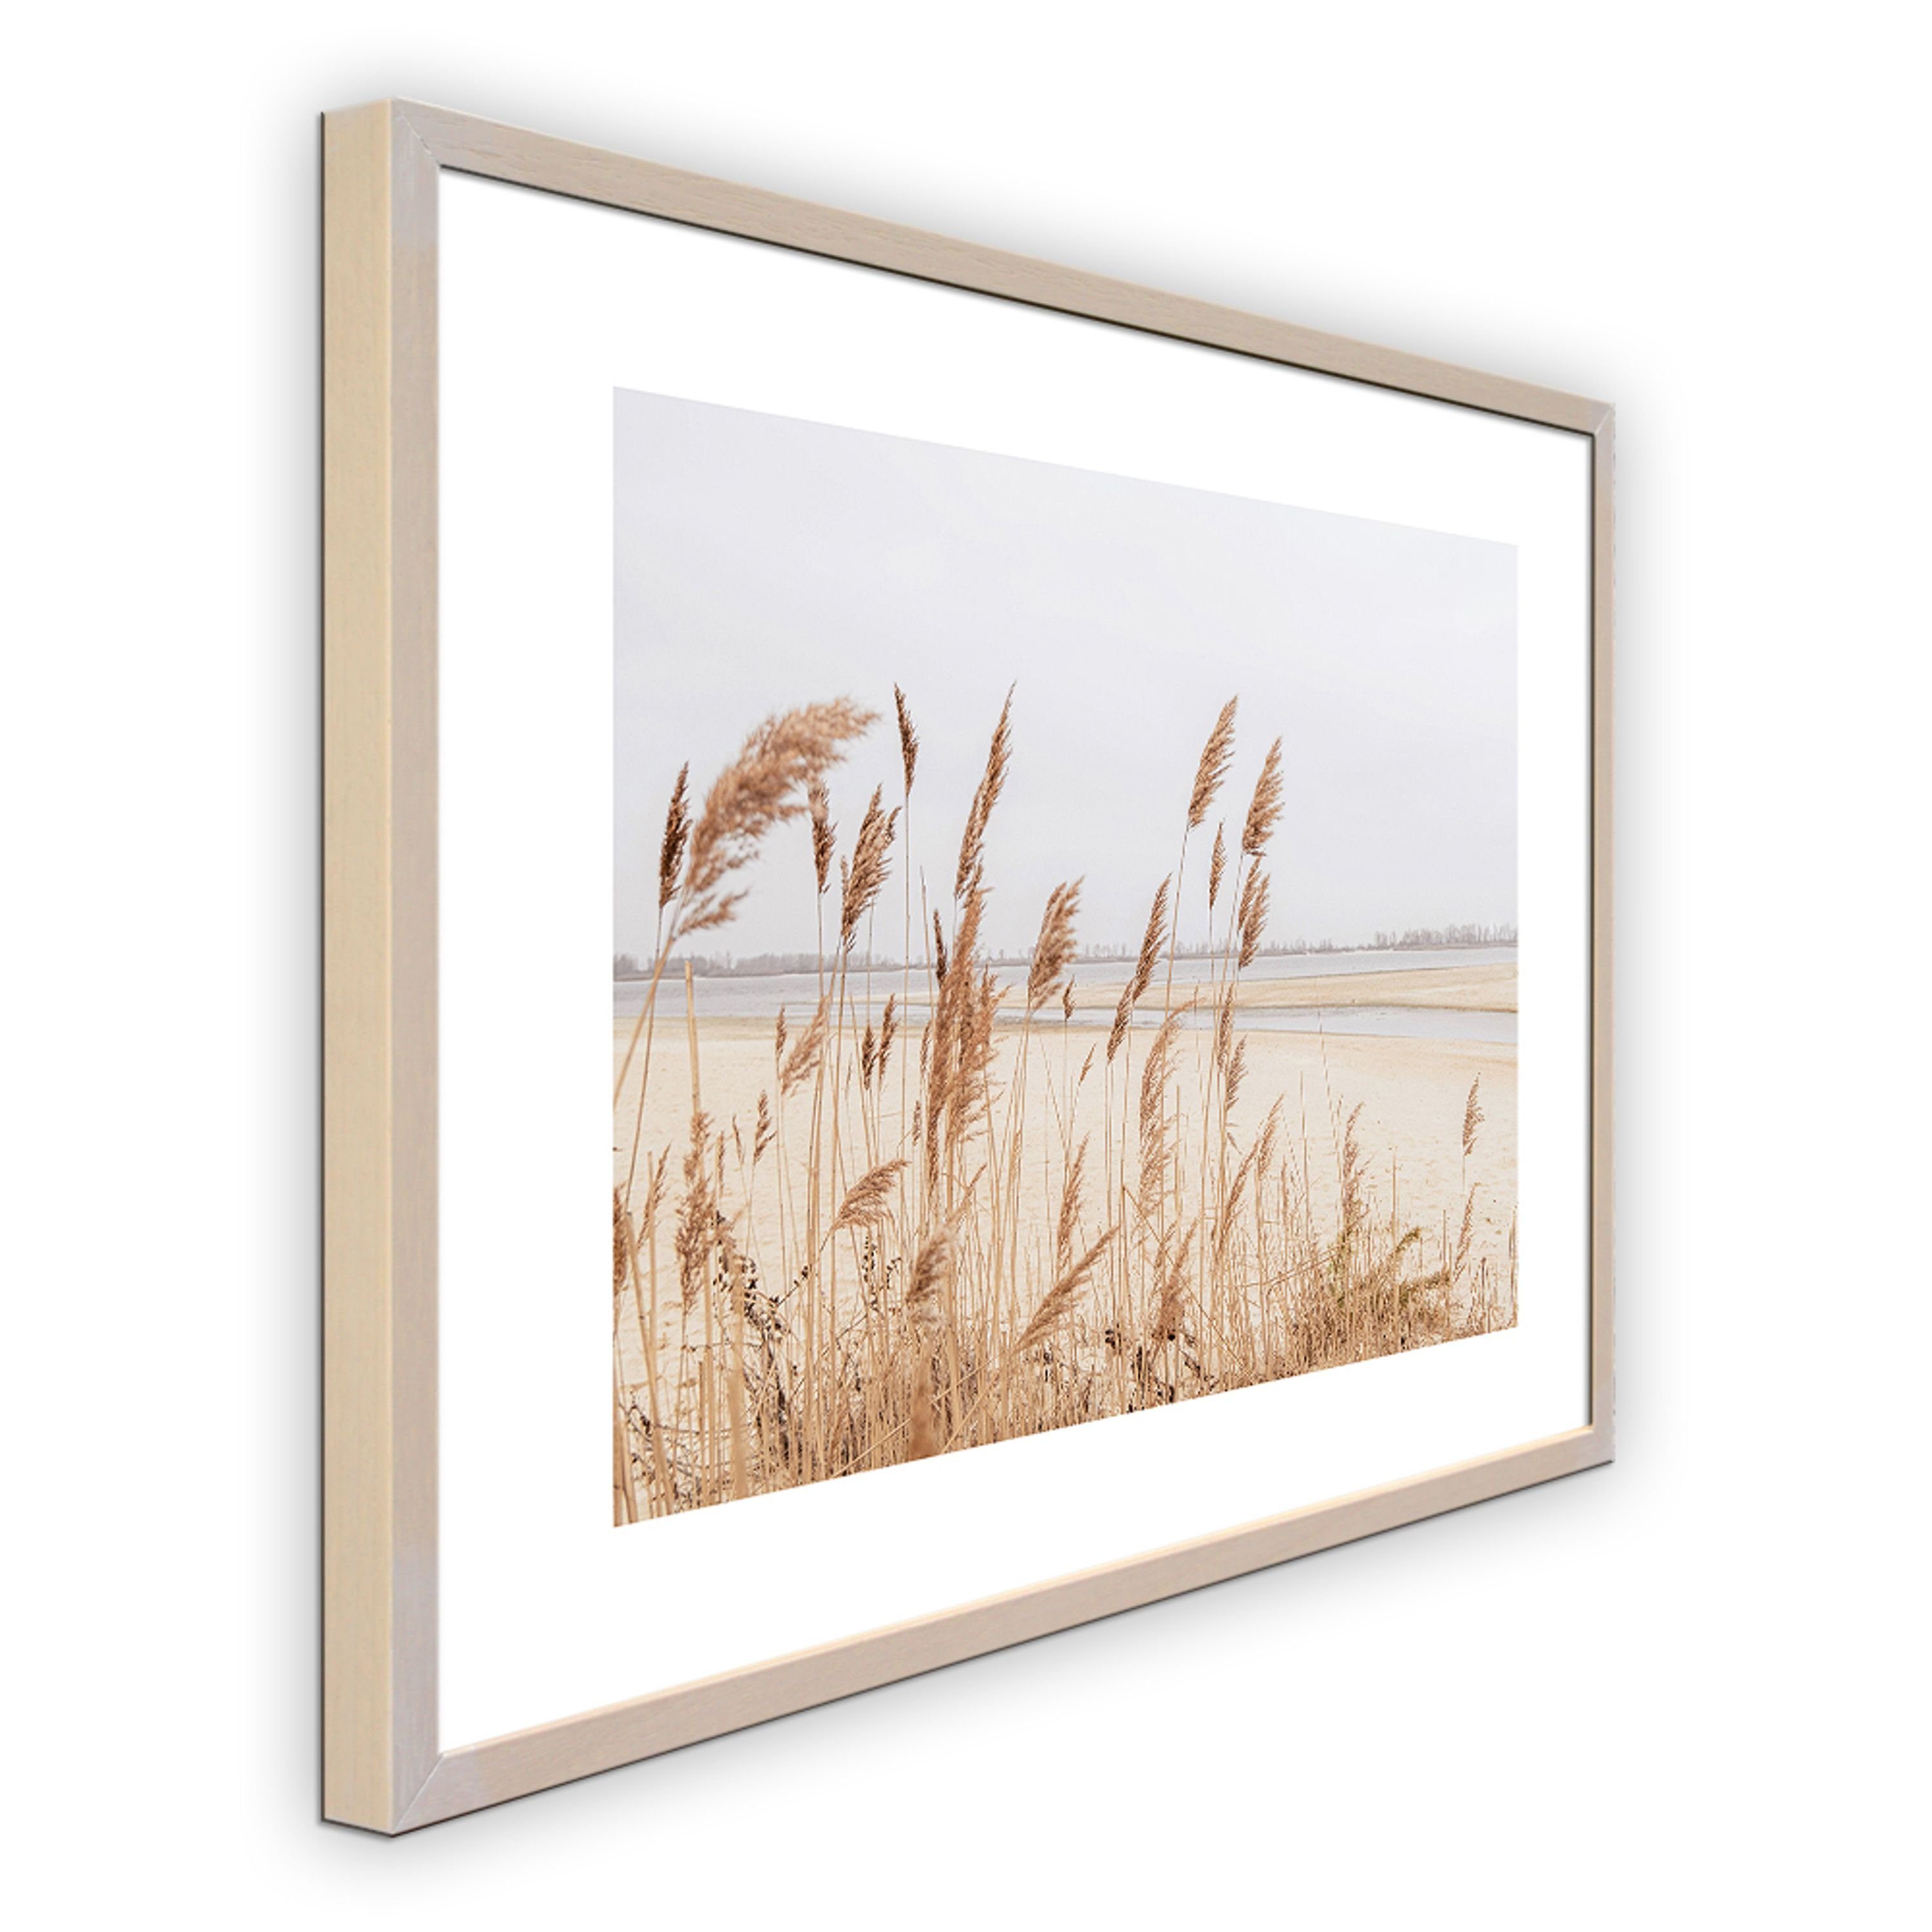 artissimo Bild 51x41cm gerahmt Bild mit Strand, Strandgräser / Design-Poster mit Rahmen Wandbild / Holz-Rahmen